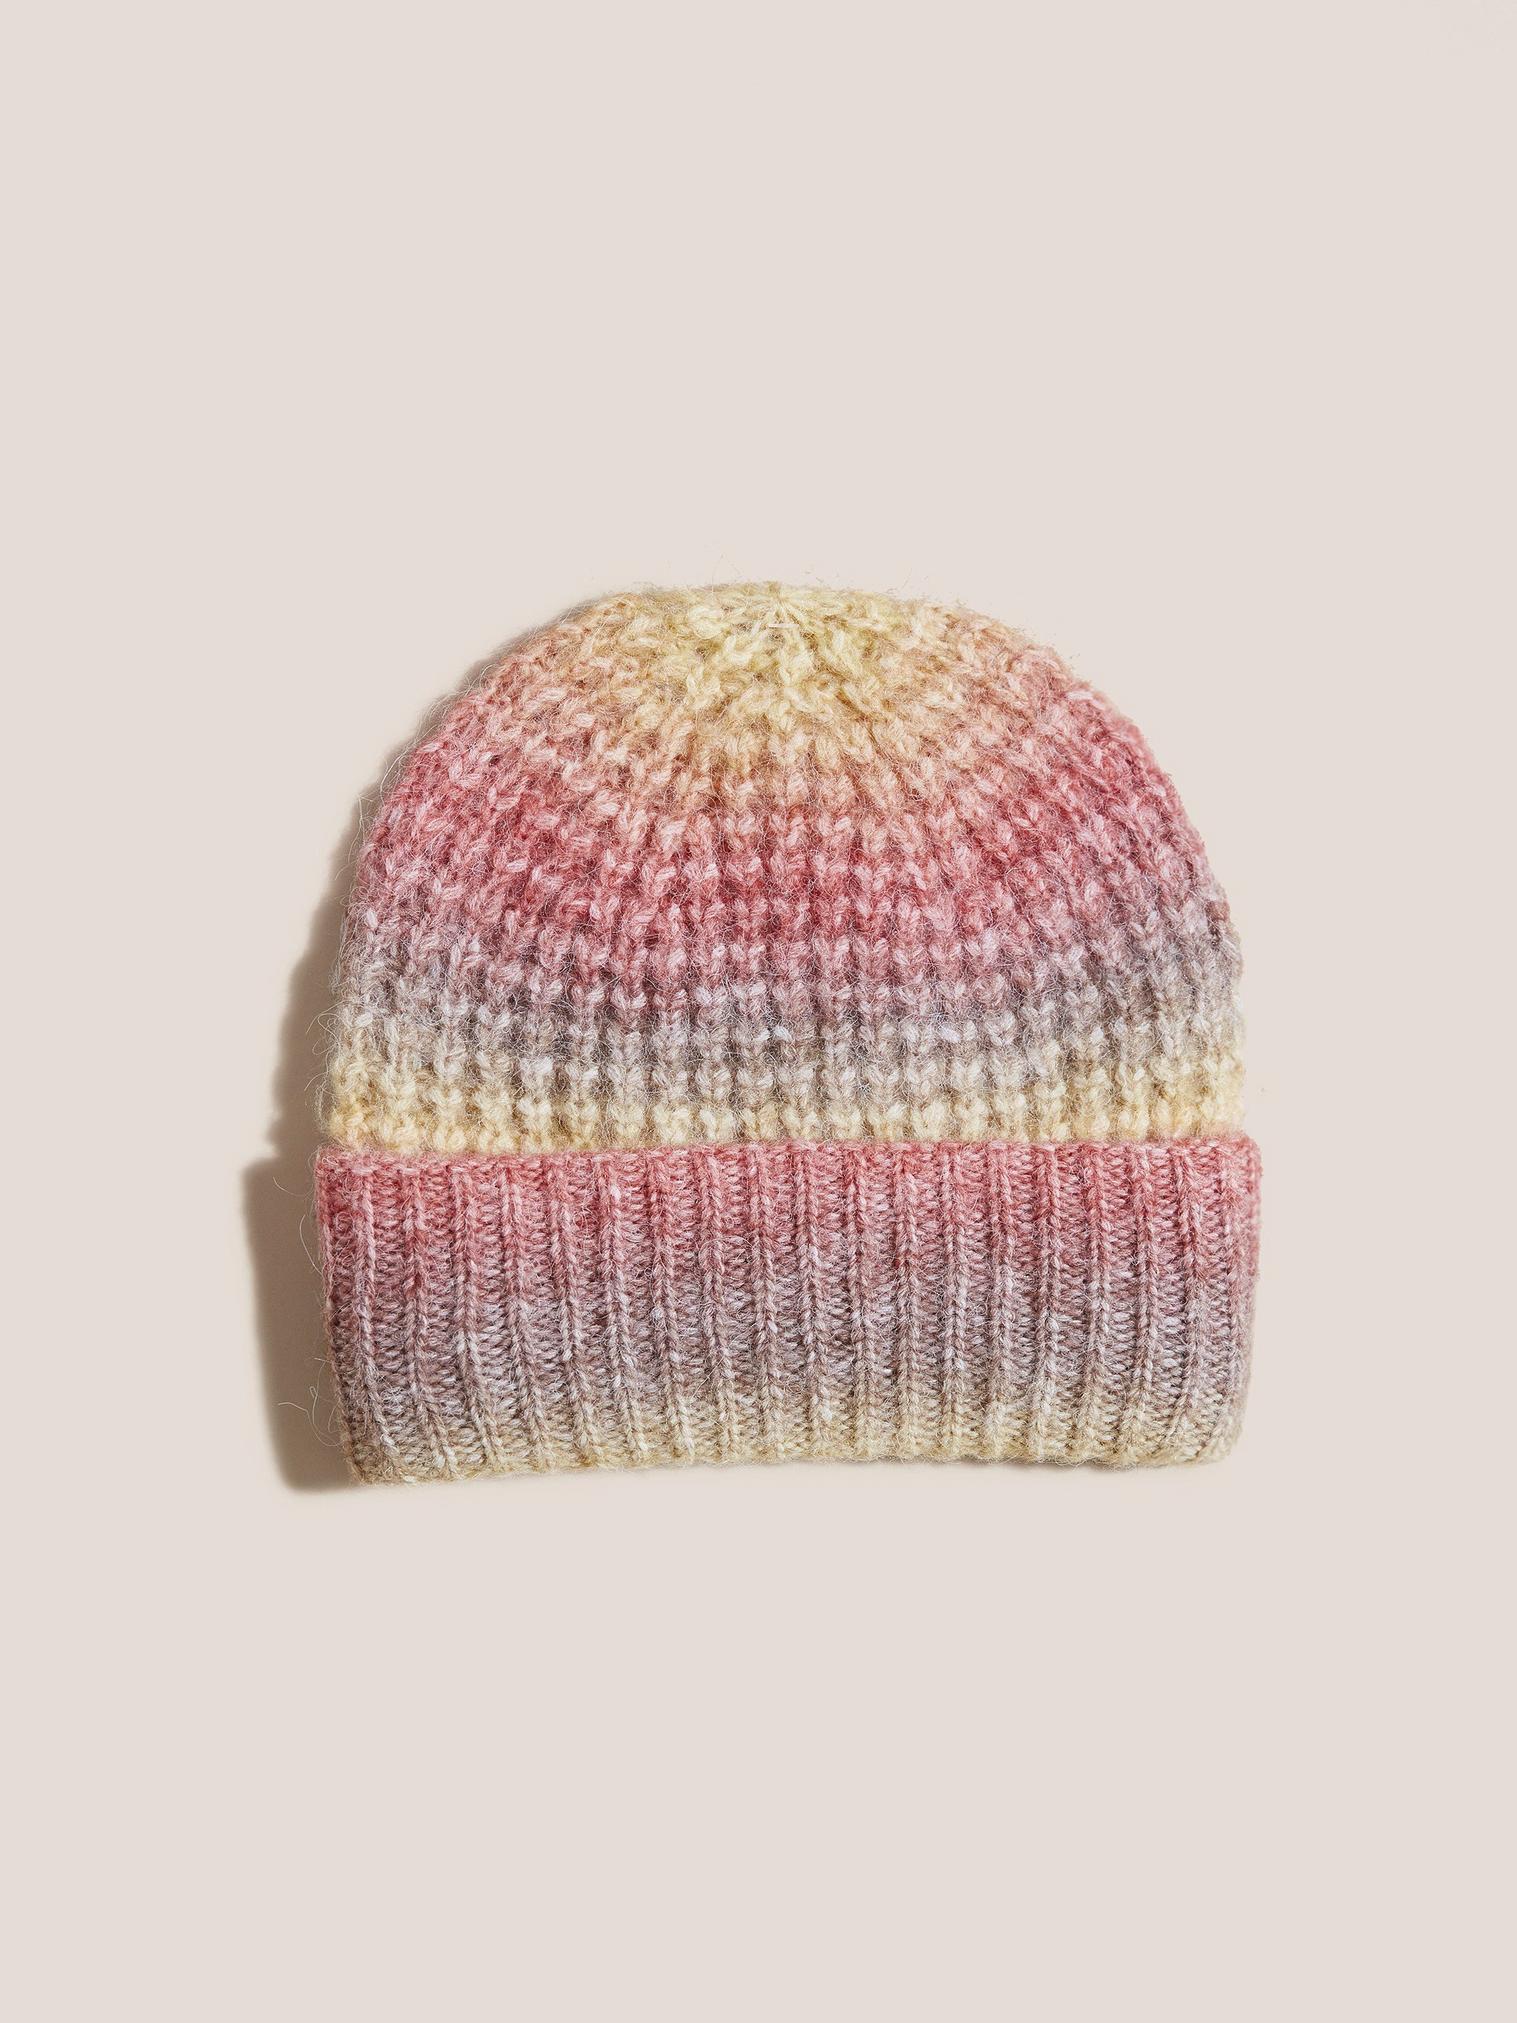 Spacedye Knit Hat in PINK MLT - FLAT FRONT